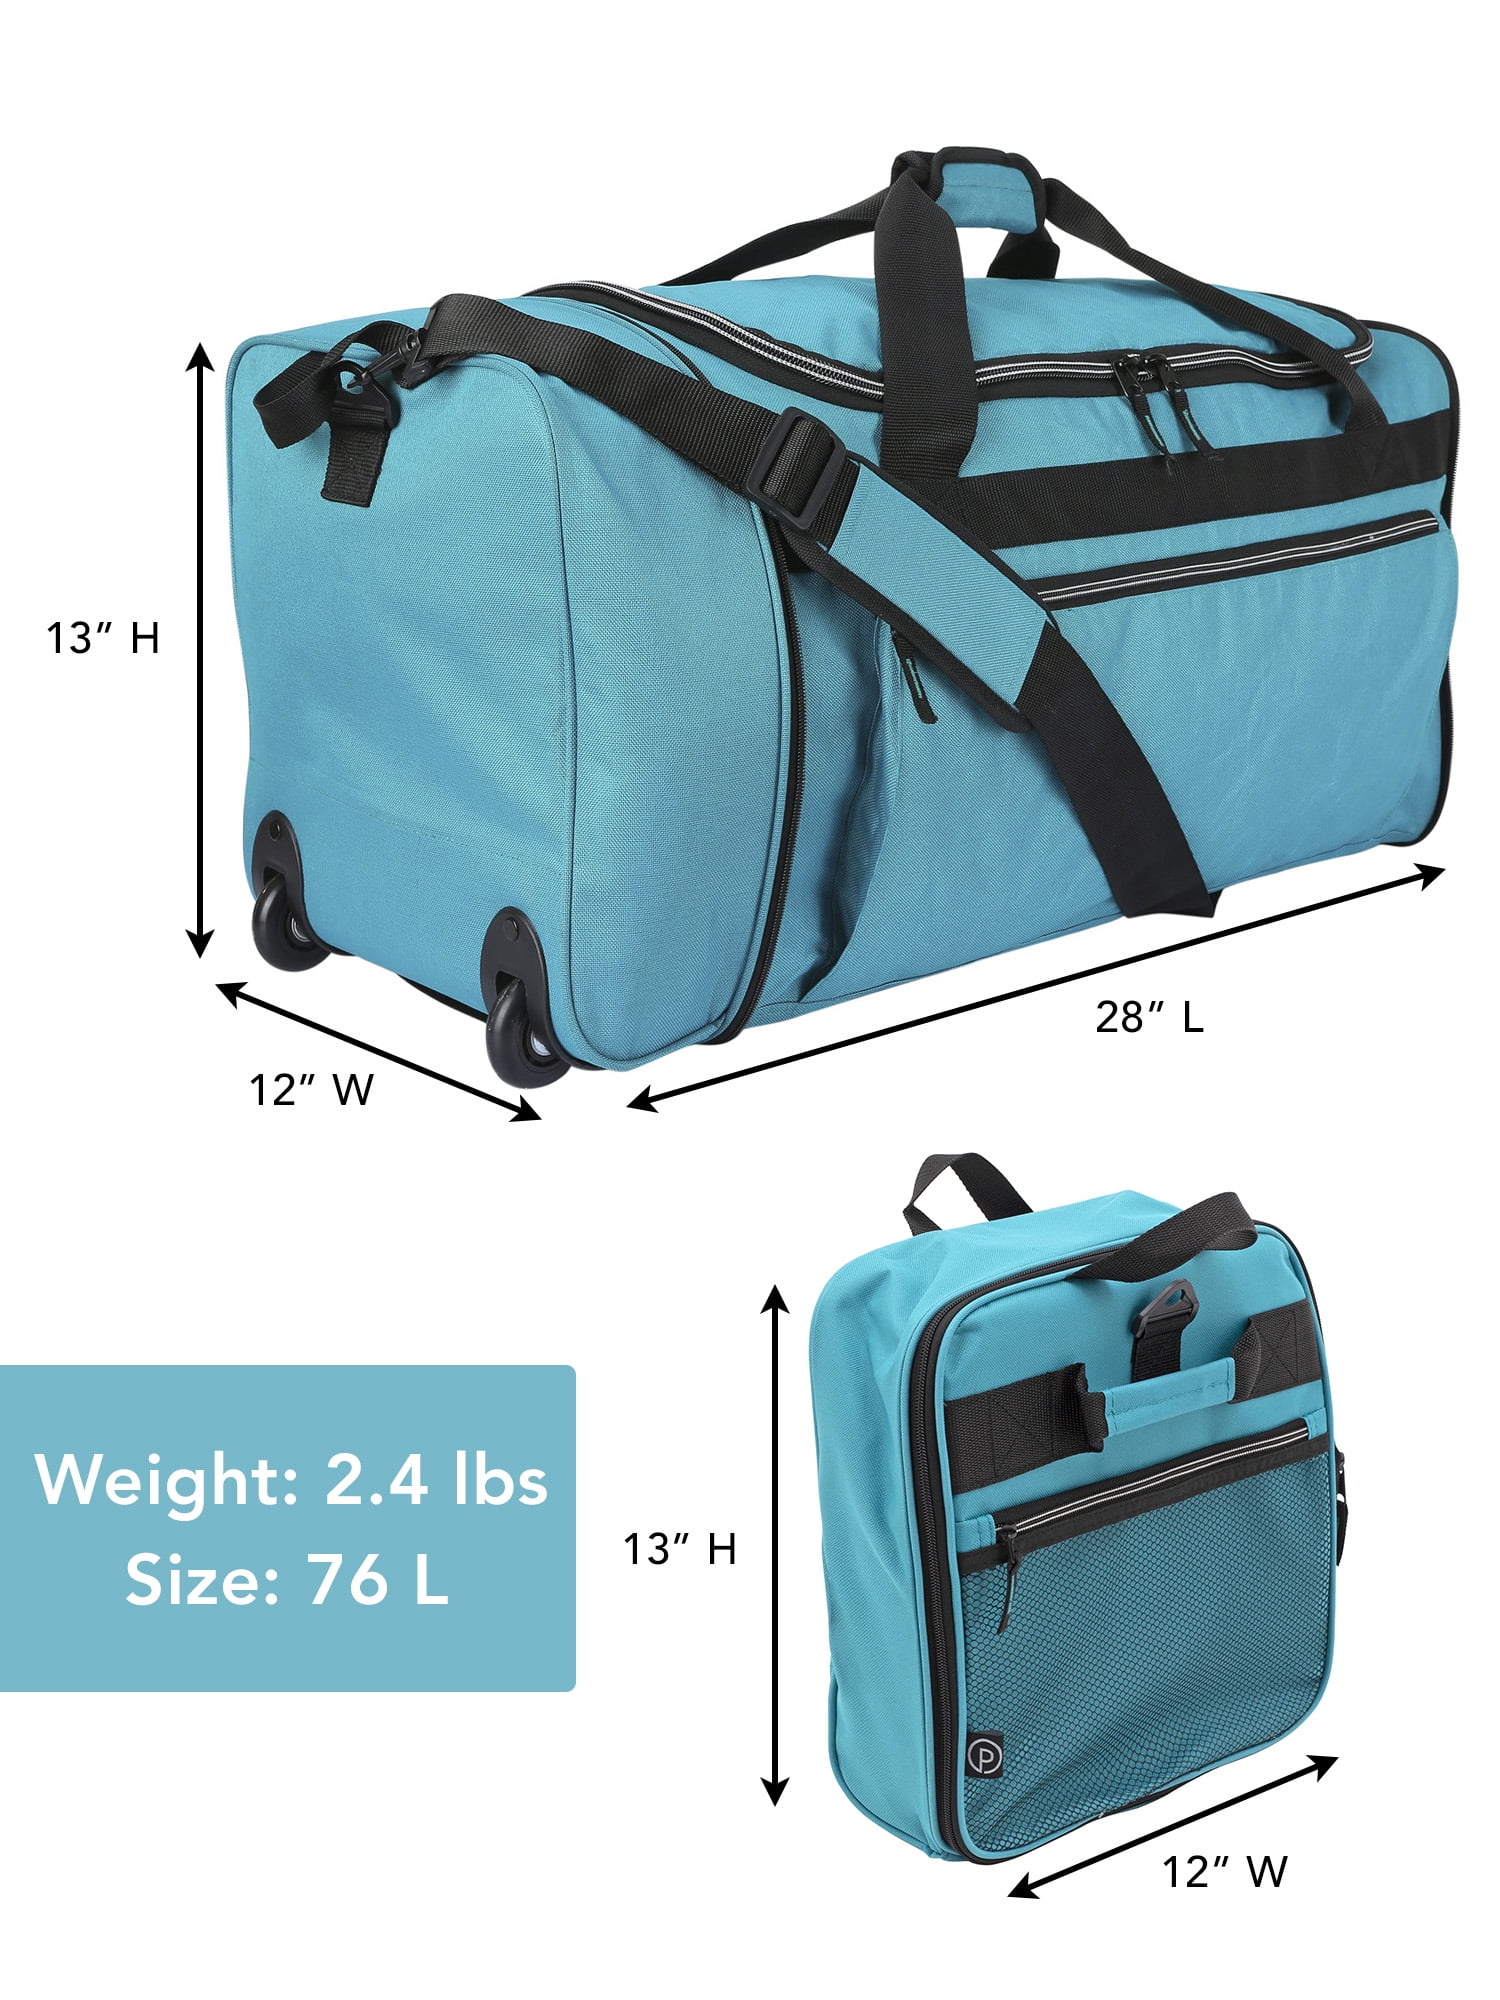 Protégé 28 Rolling Collapsible Travel Duffel Bag, Teal 